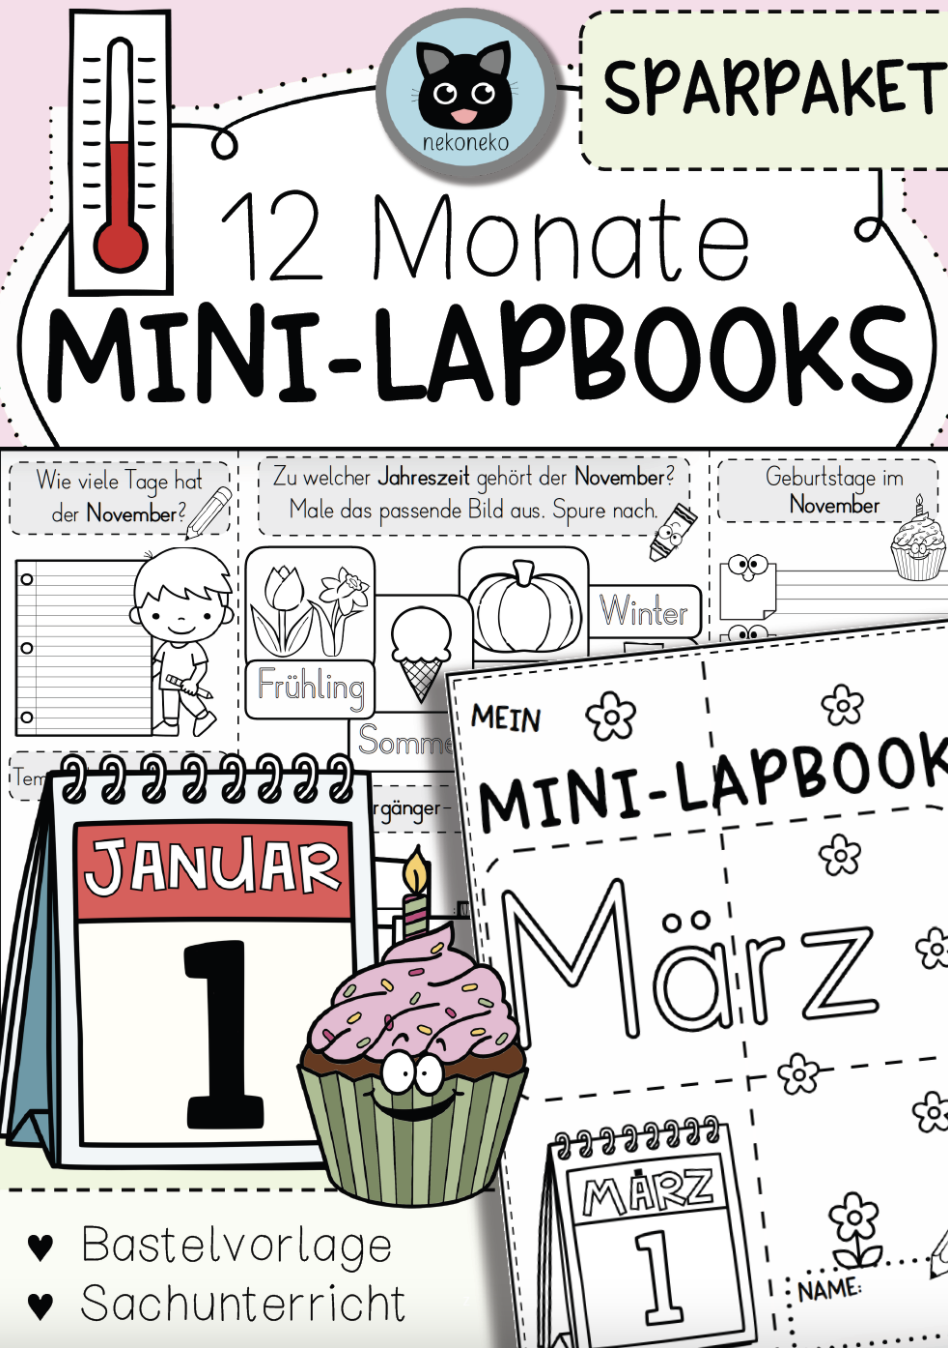 Die 12 Monate | SPARPAKET Mini-Lapbooks | Sachunterricht